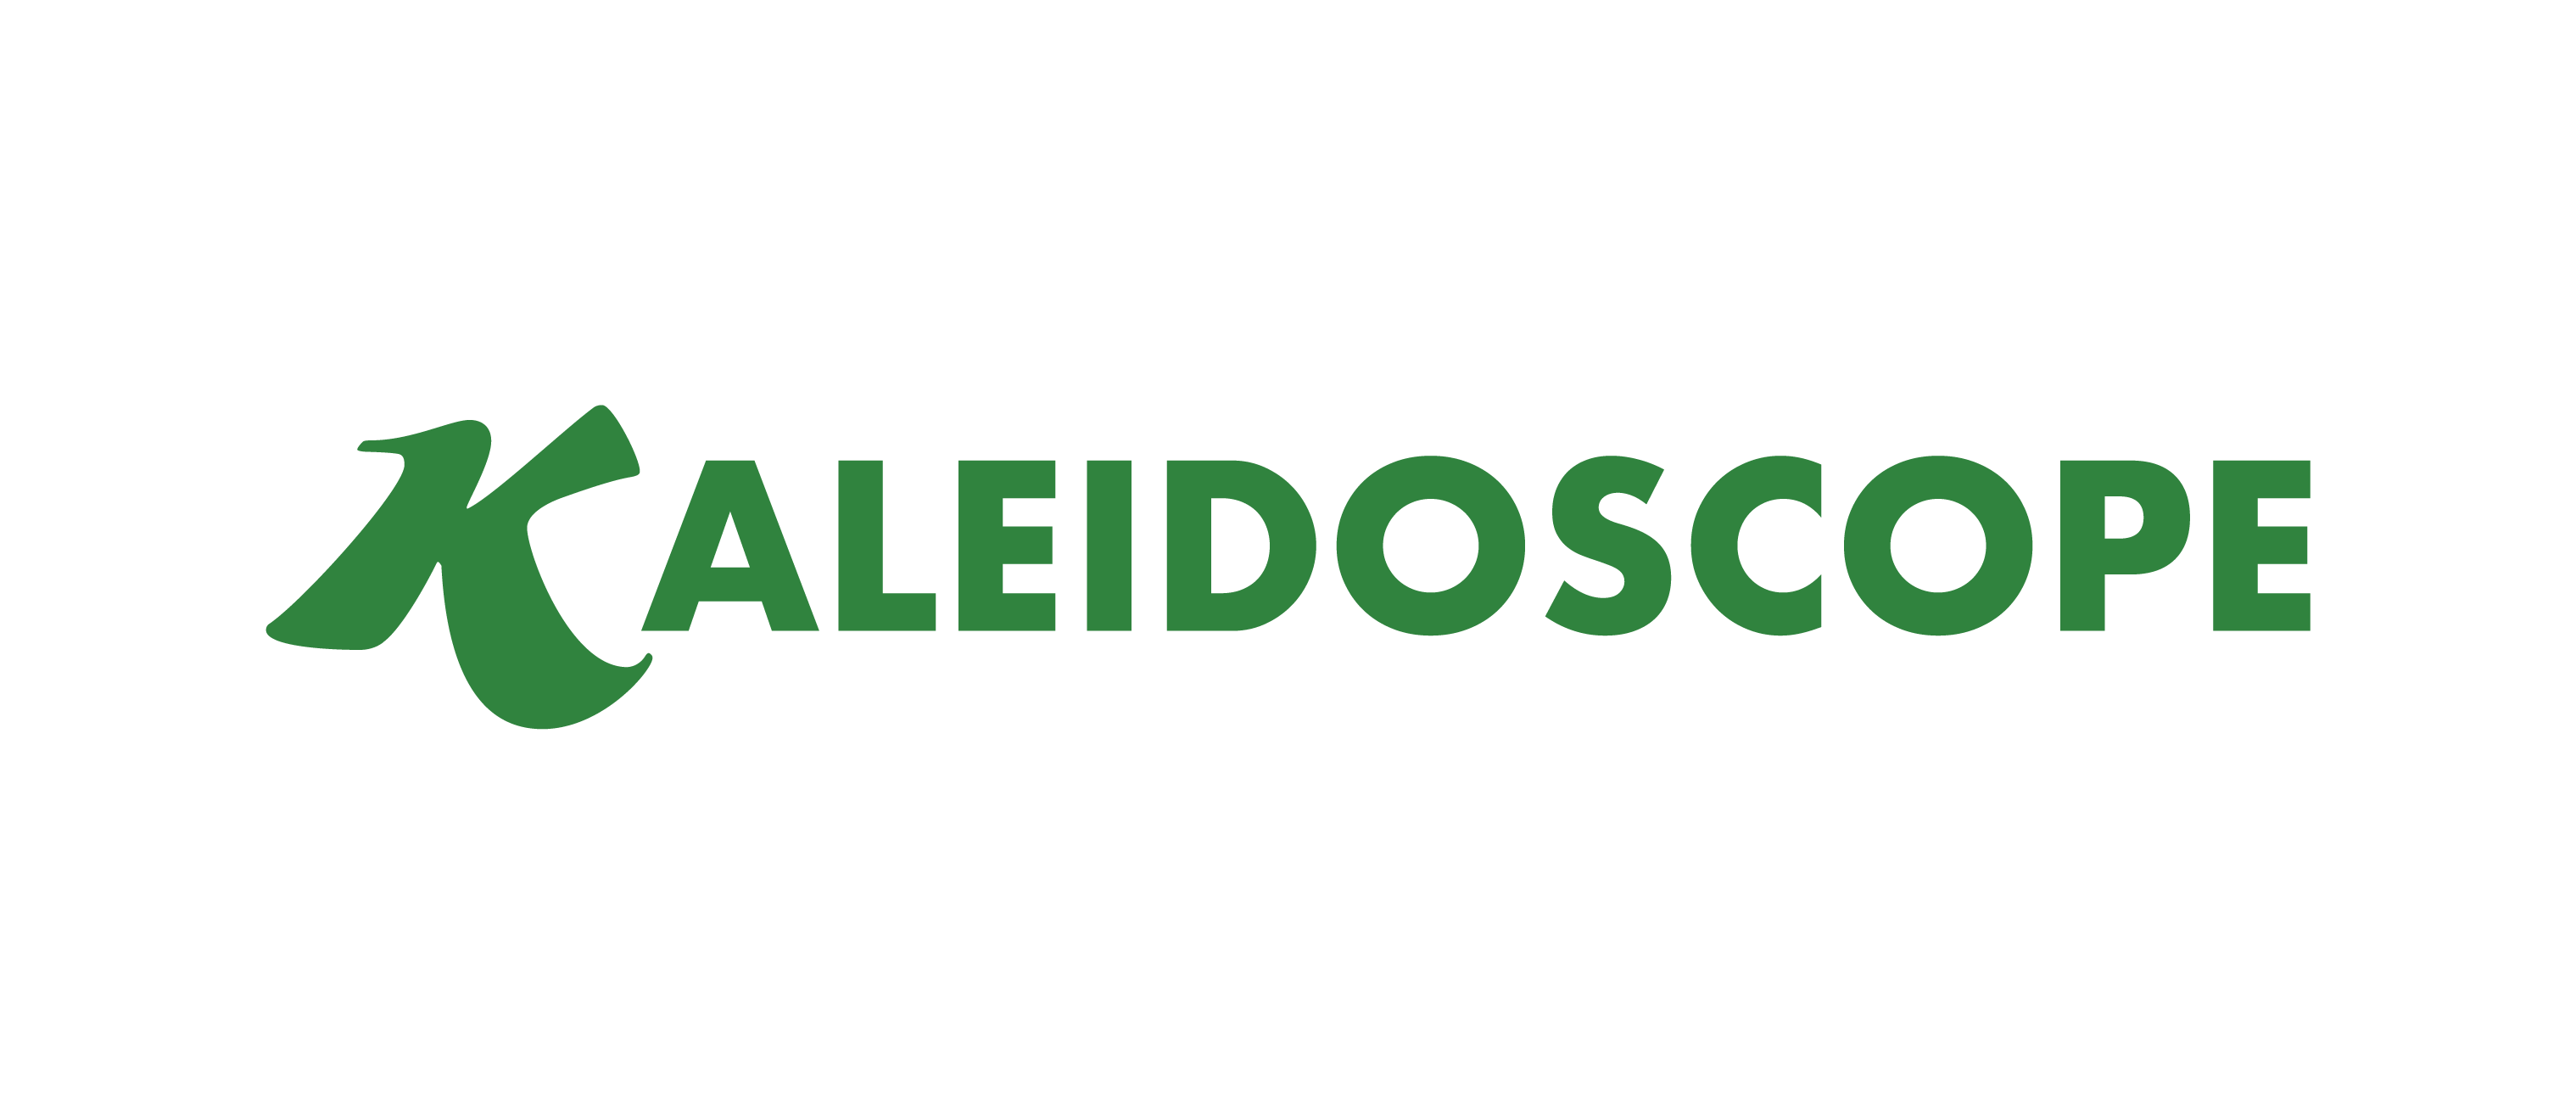 The Kaleidoscope Logo2 1